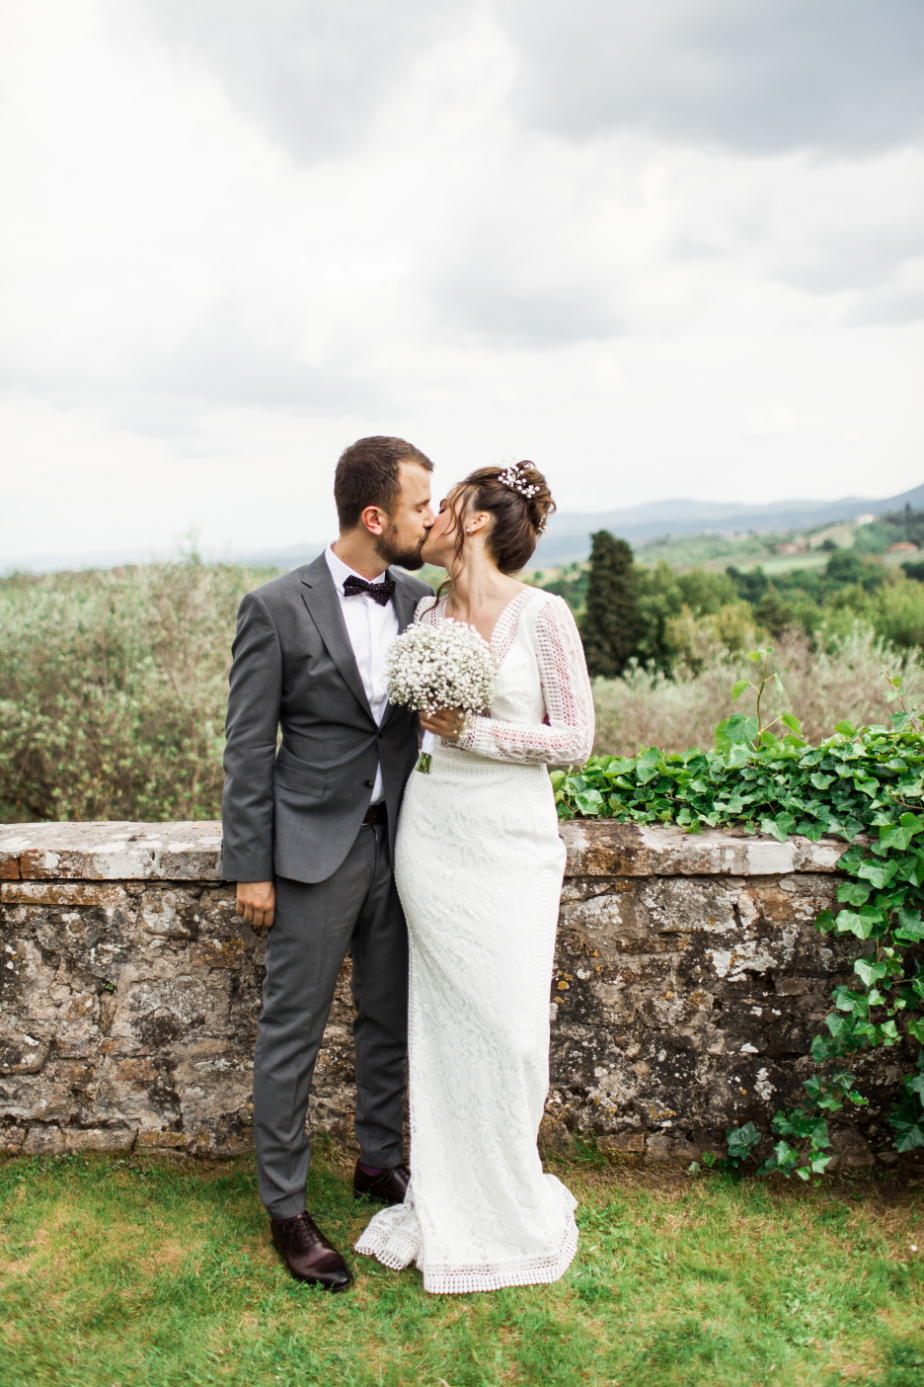 Modern Italian Wedding In Tuscany With Luxury Details